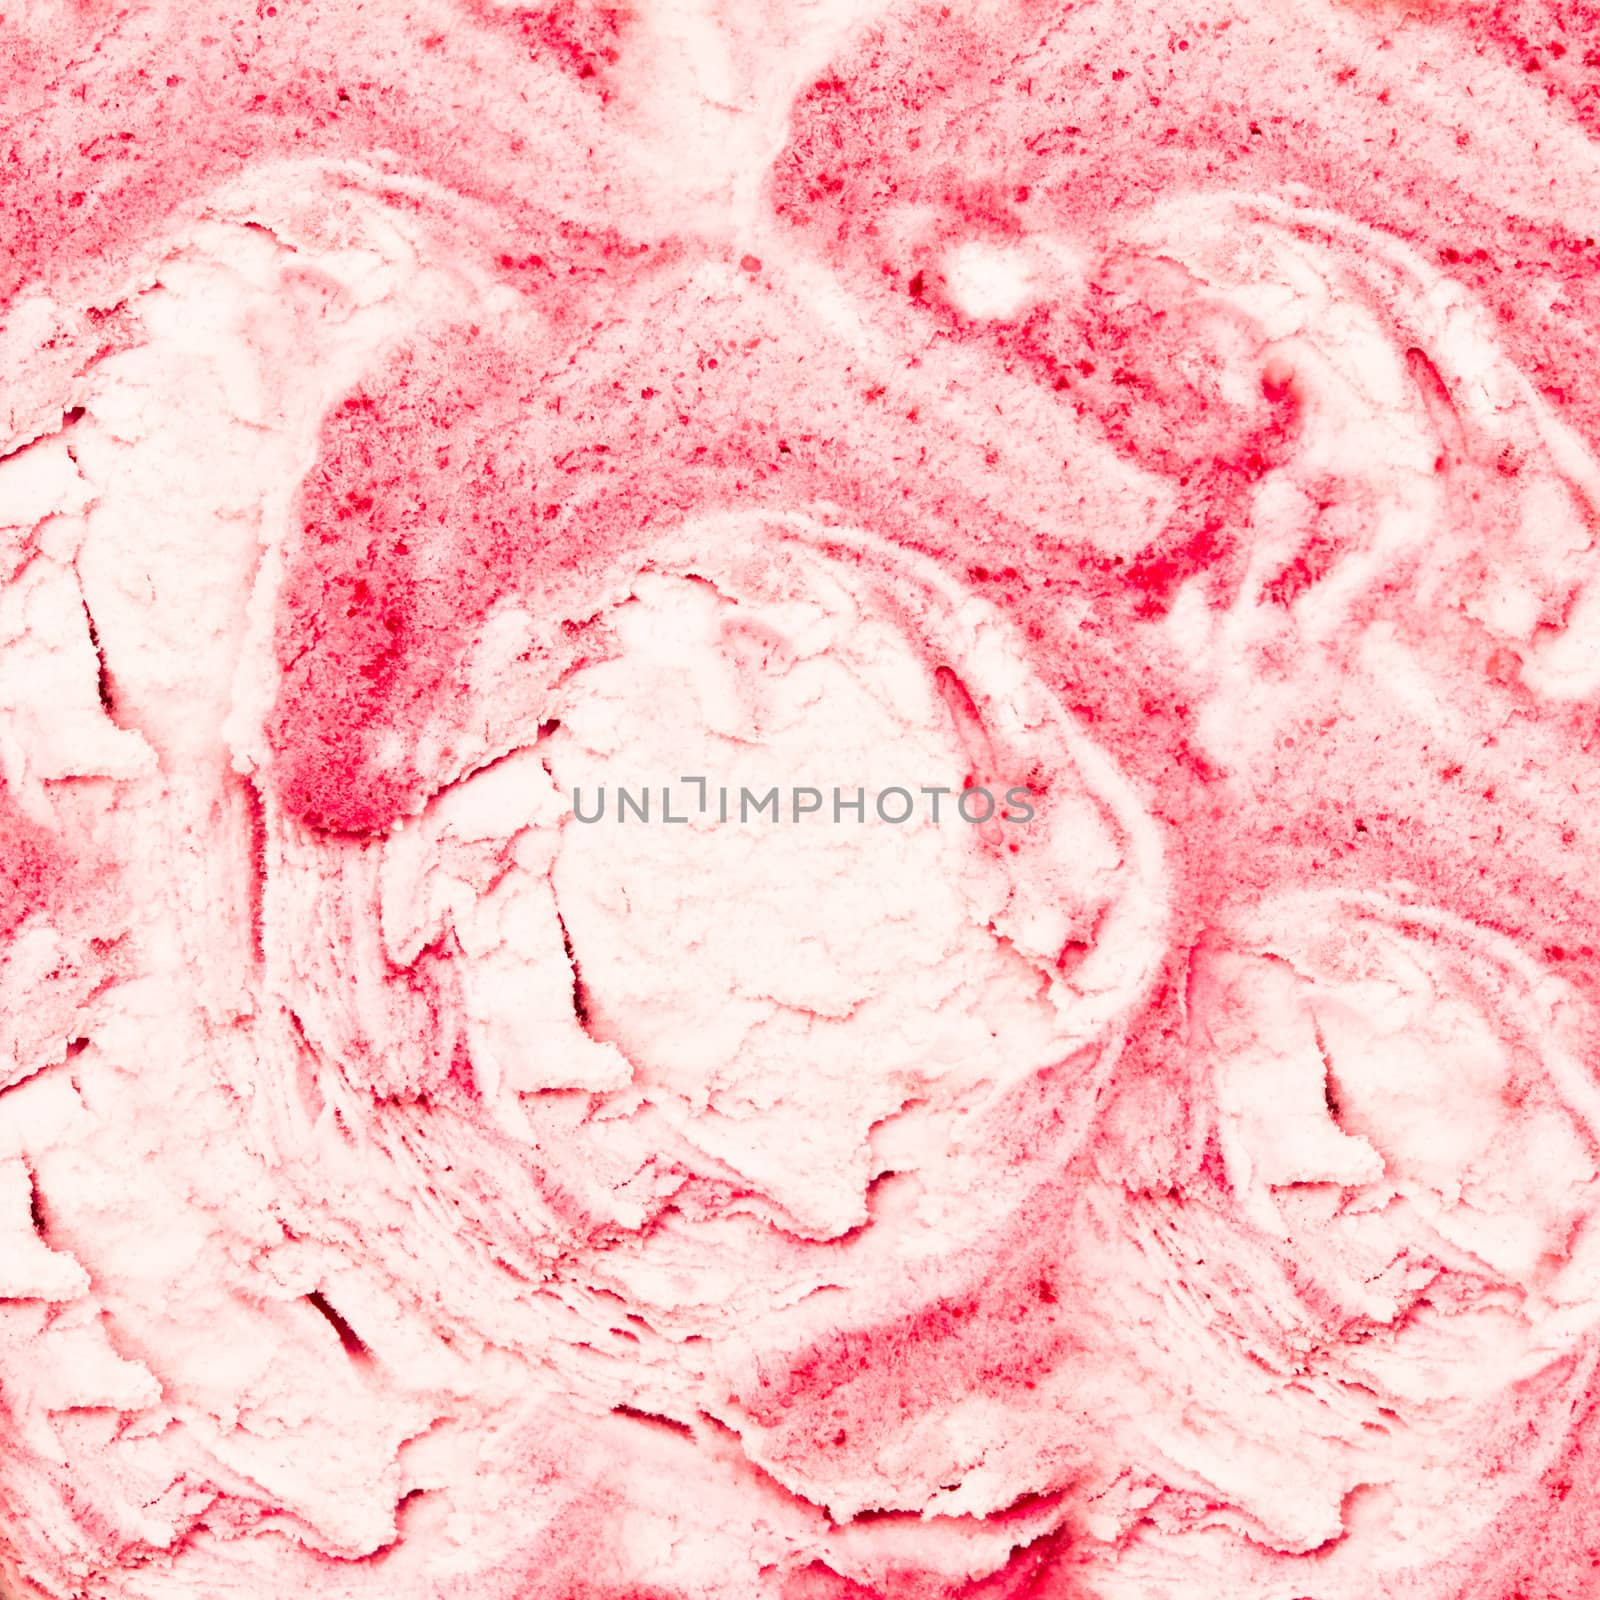 Nice background image of raspberry ripple flavored ice cream